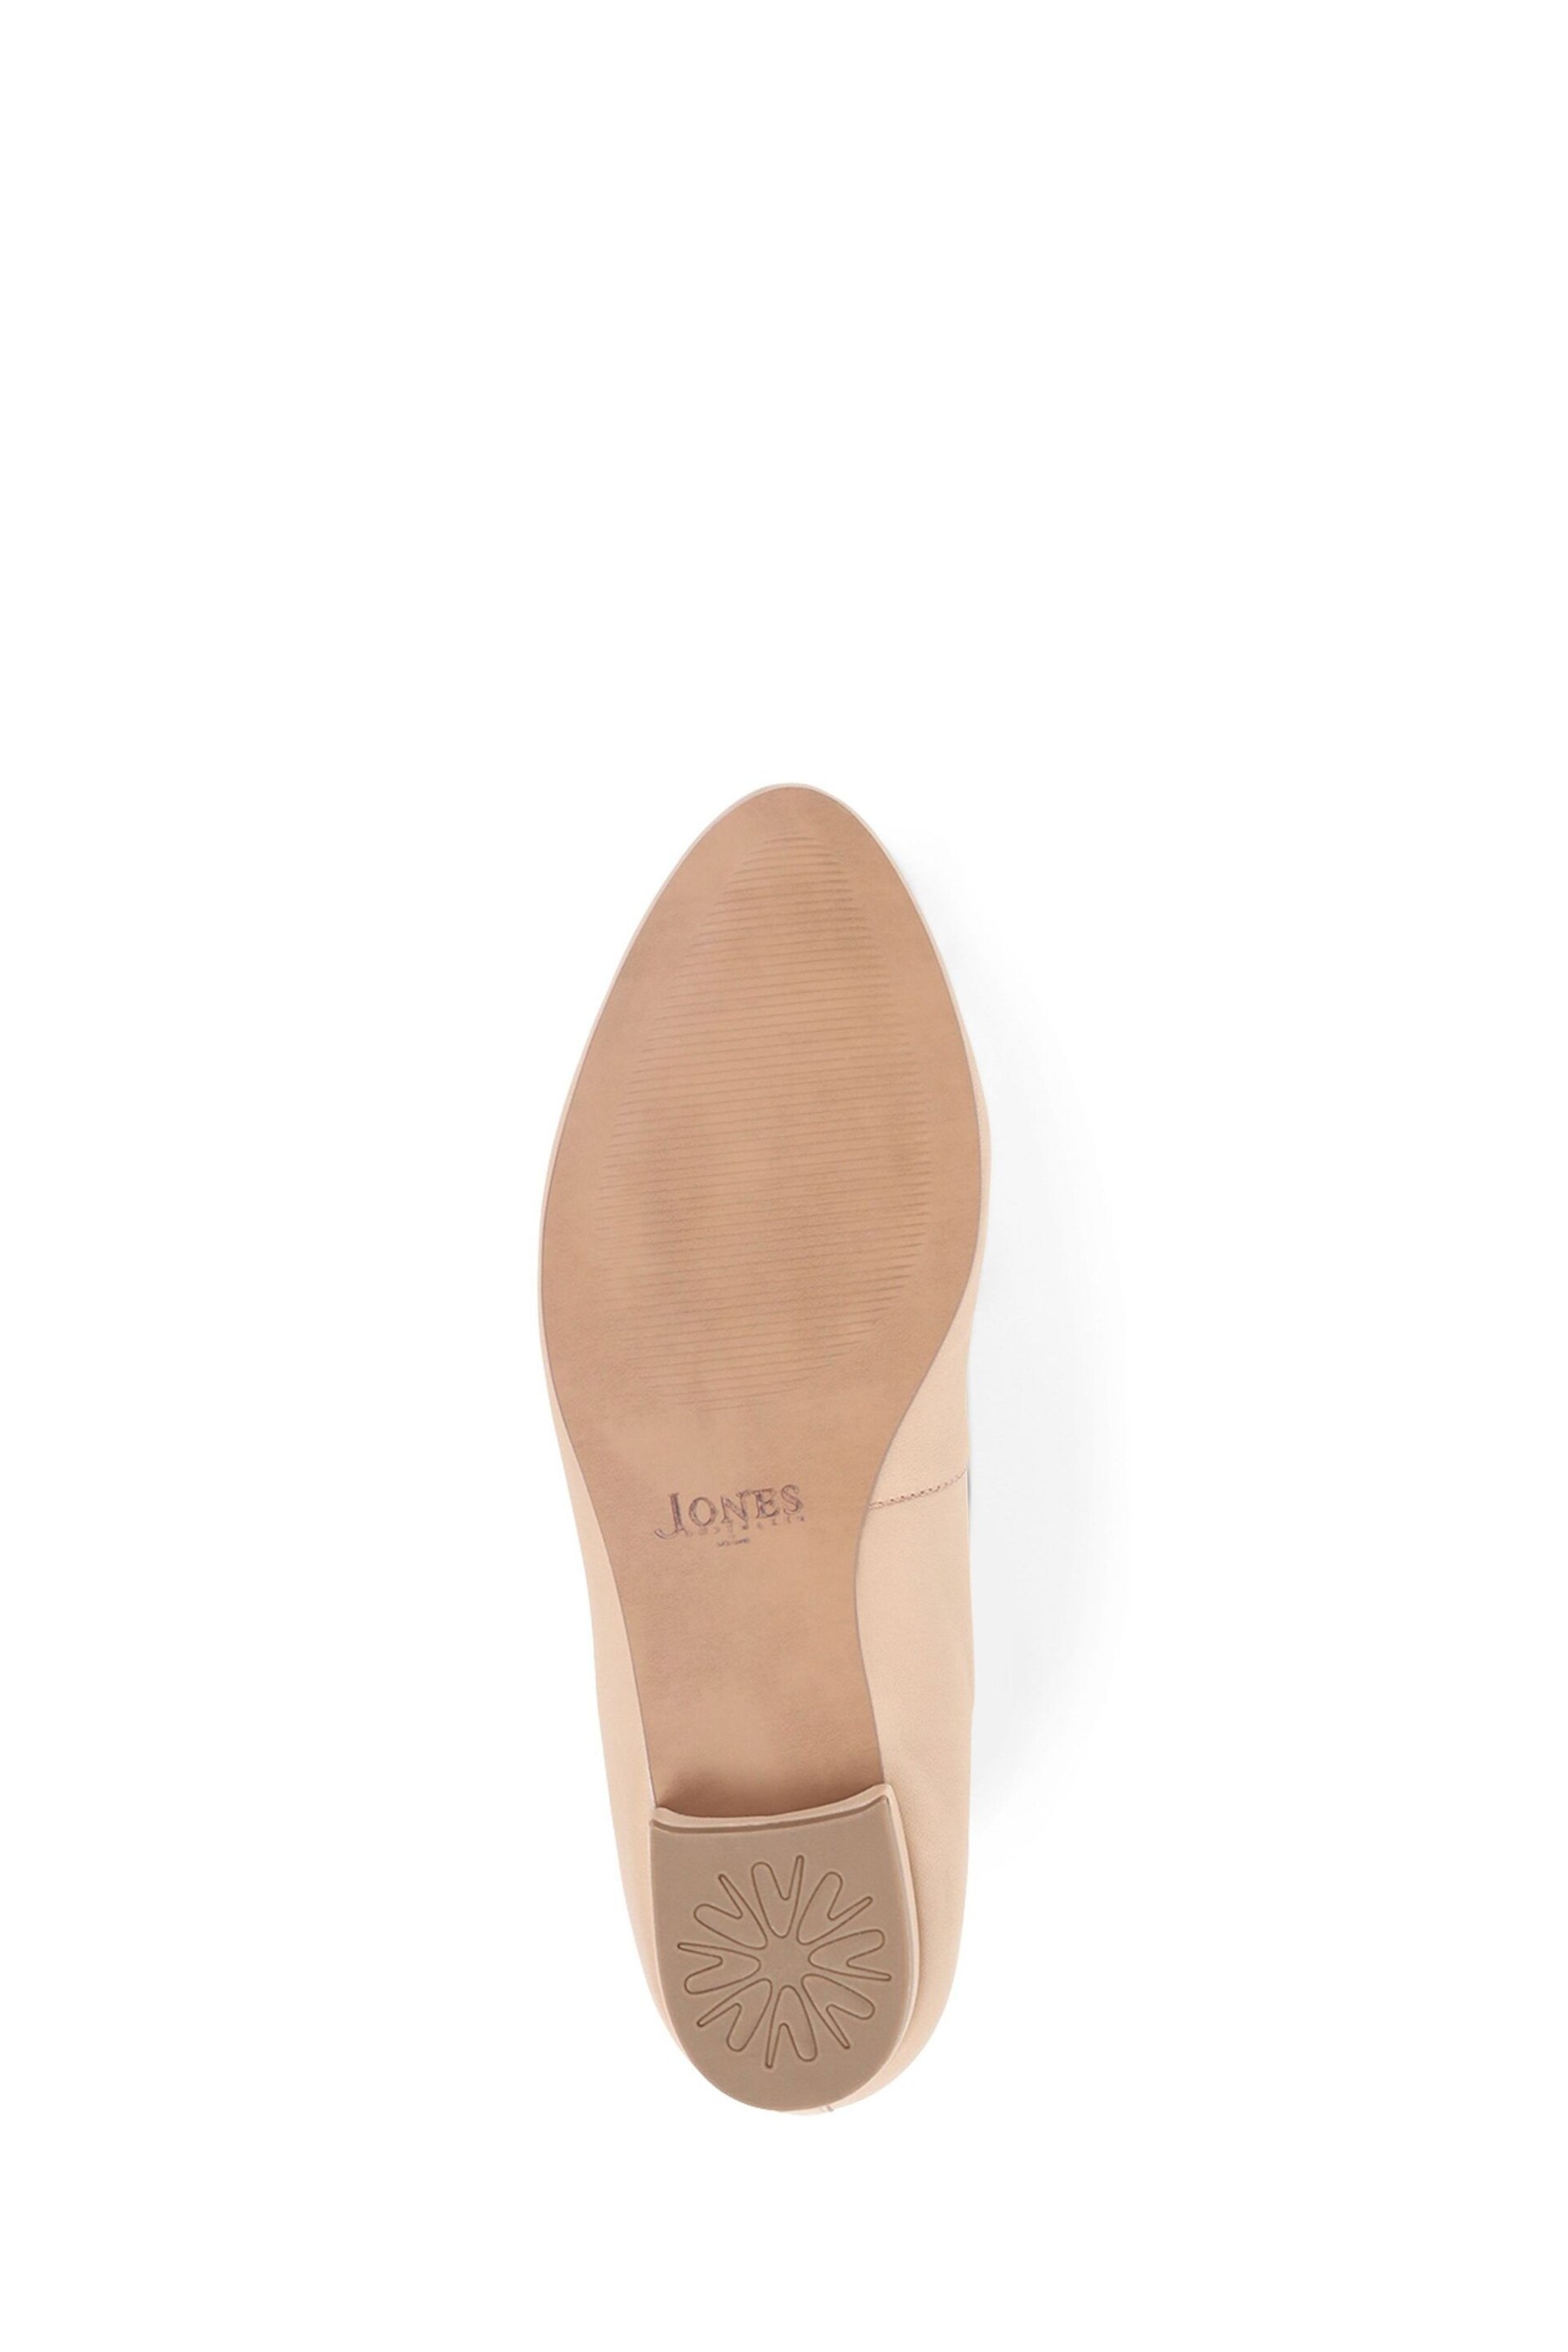 Jones Bootmaker Cream Soleil Leather Low Ballet Shoes - Image 6 of 6